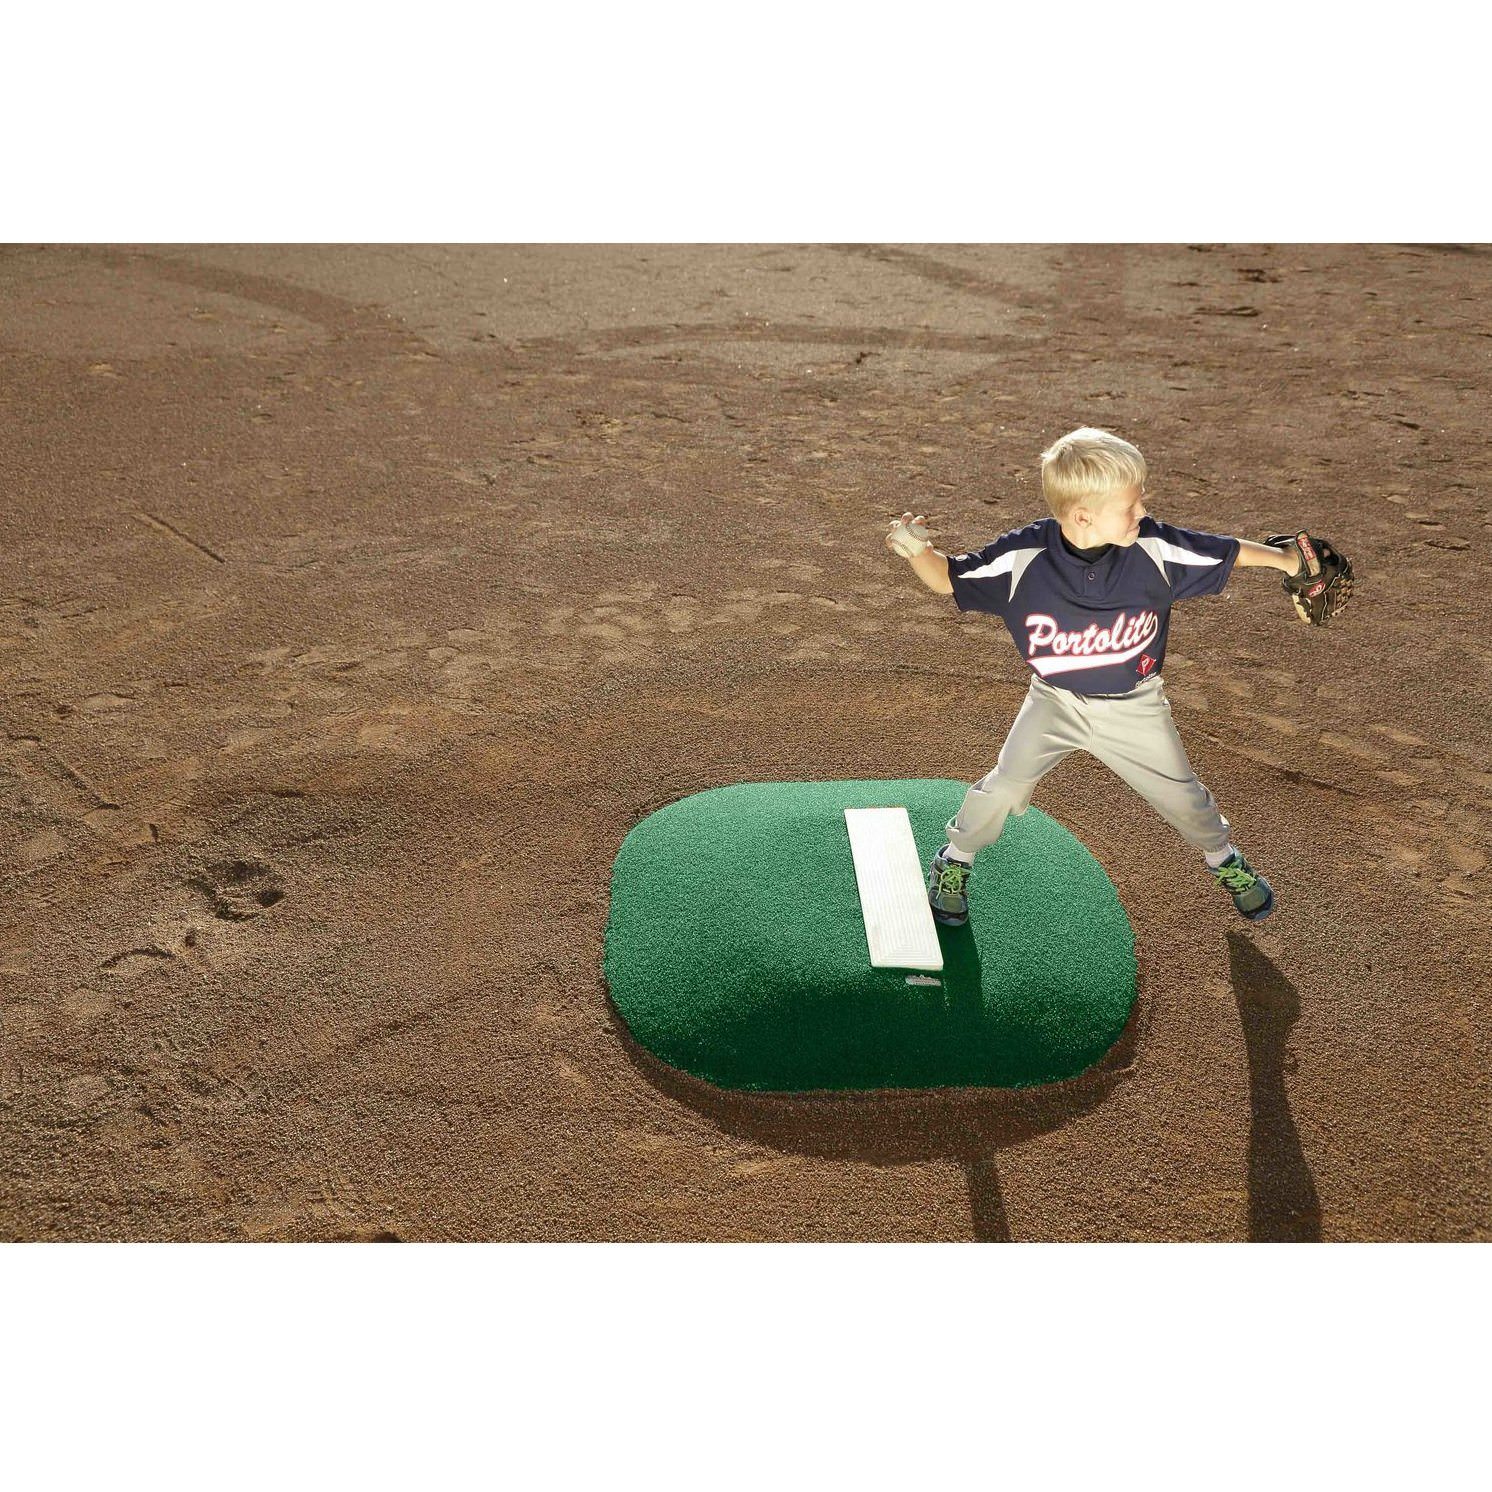 PortoLite 4" Youth Portable Baseball Pitching Mound green turf kid pitching